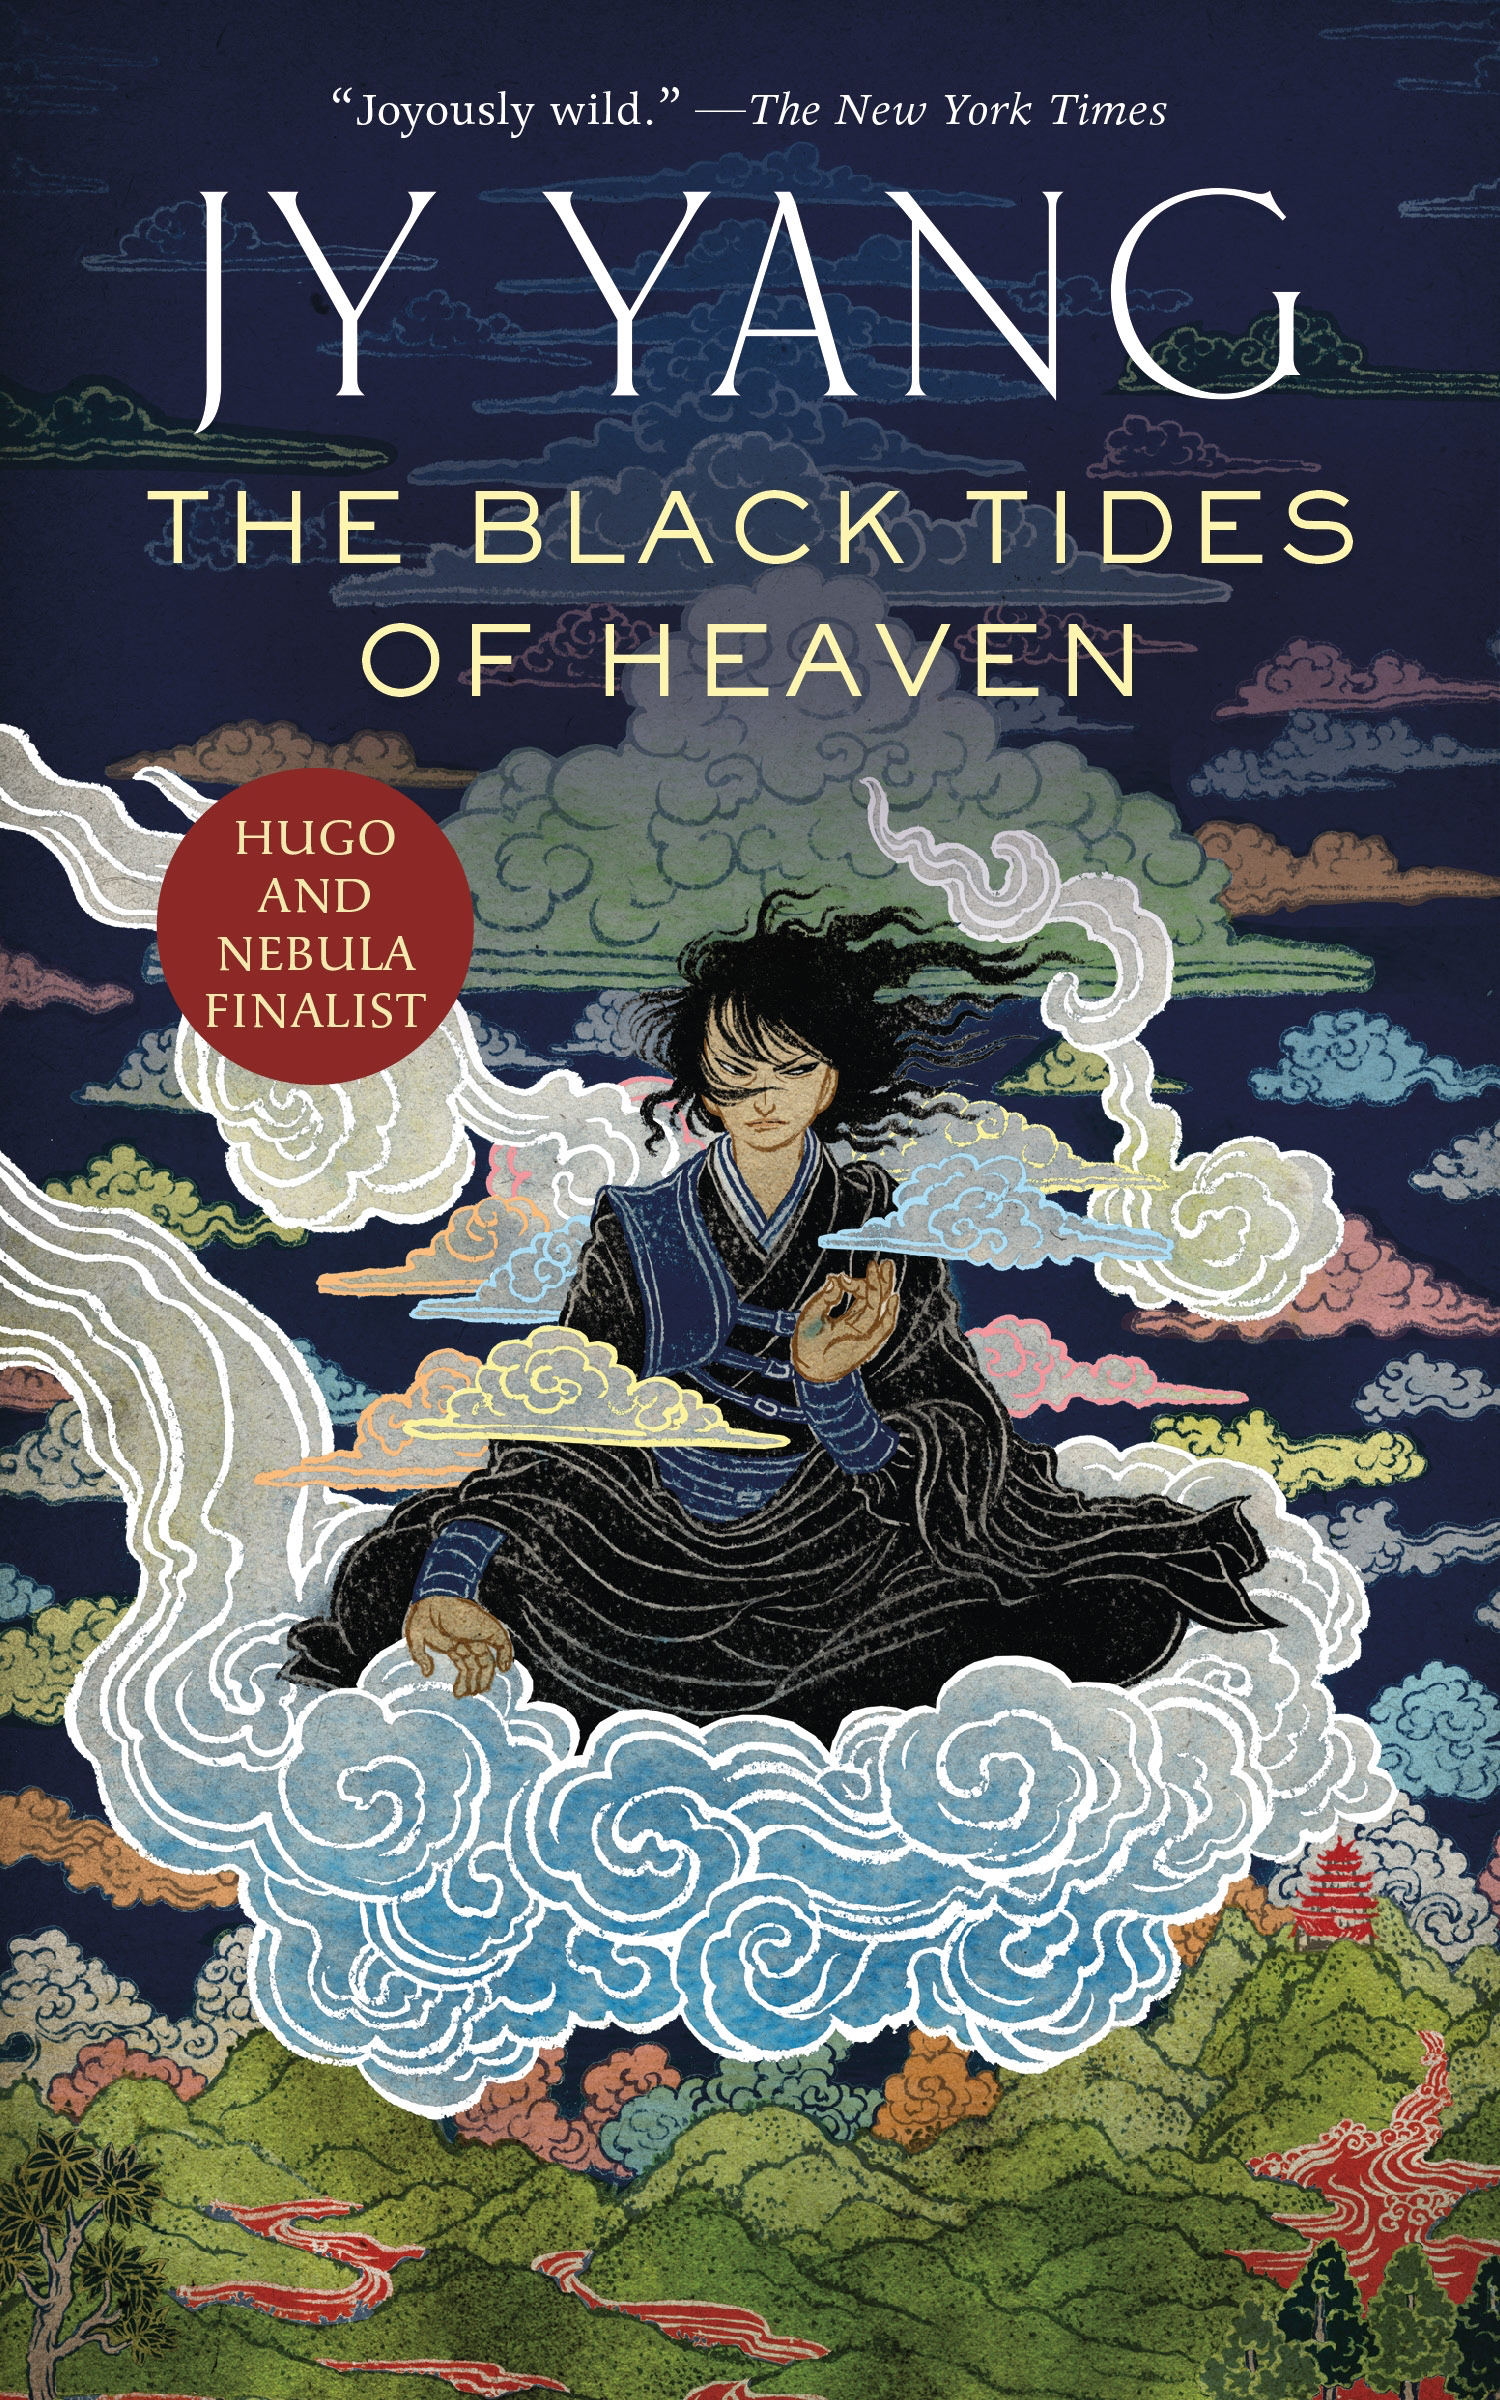 The Black Tides of Heaven JY Yang Free Ebook Club November 2018